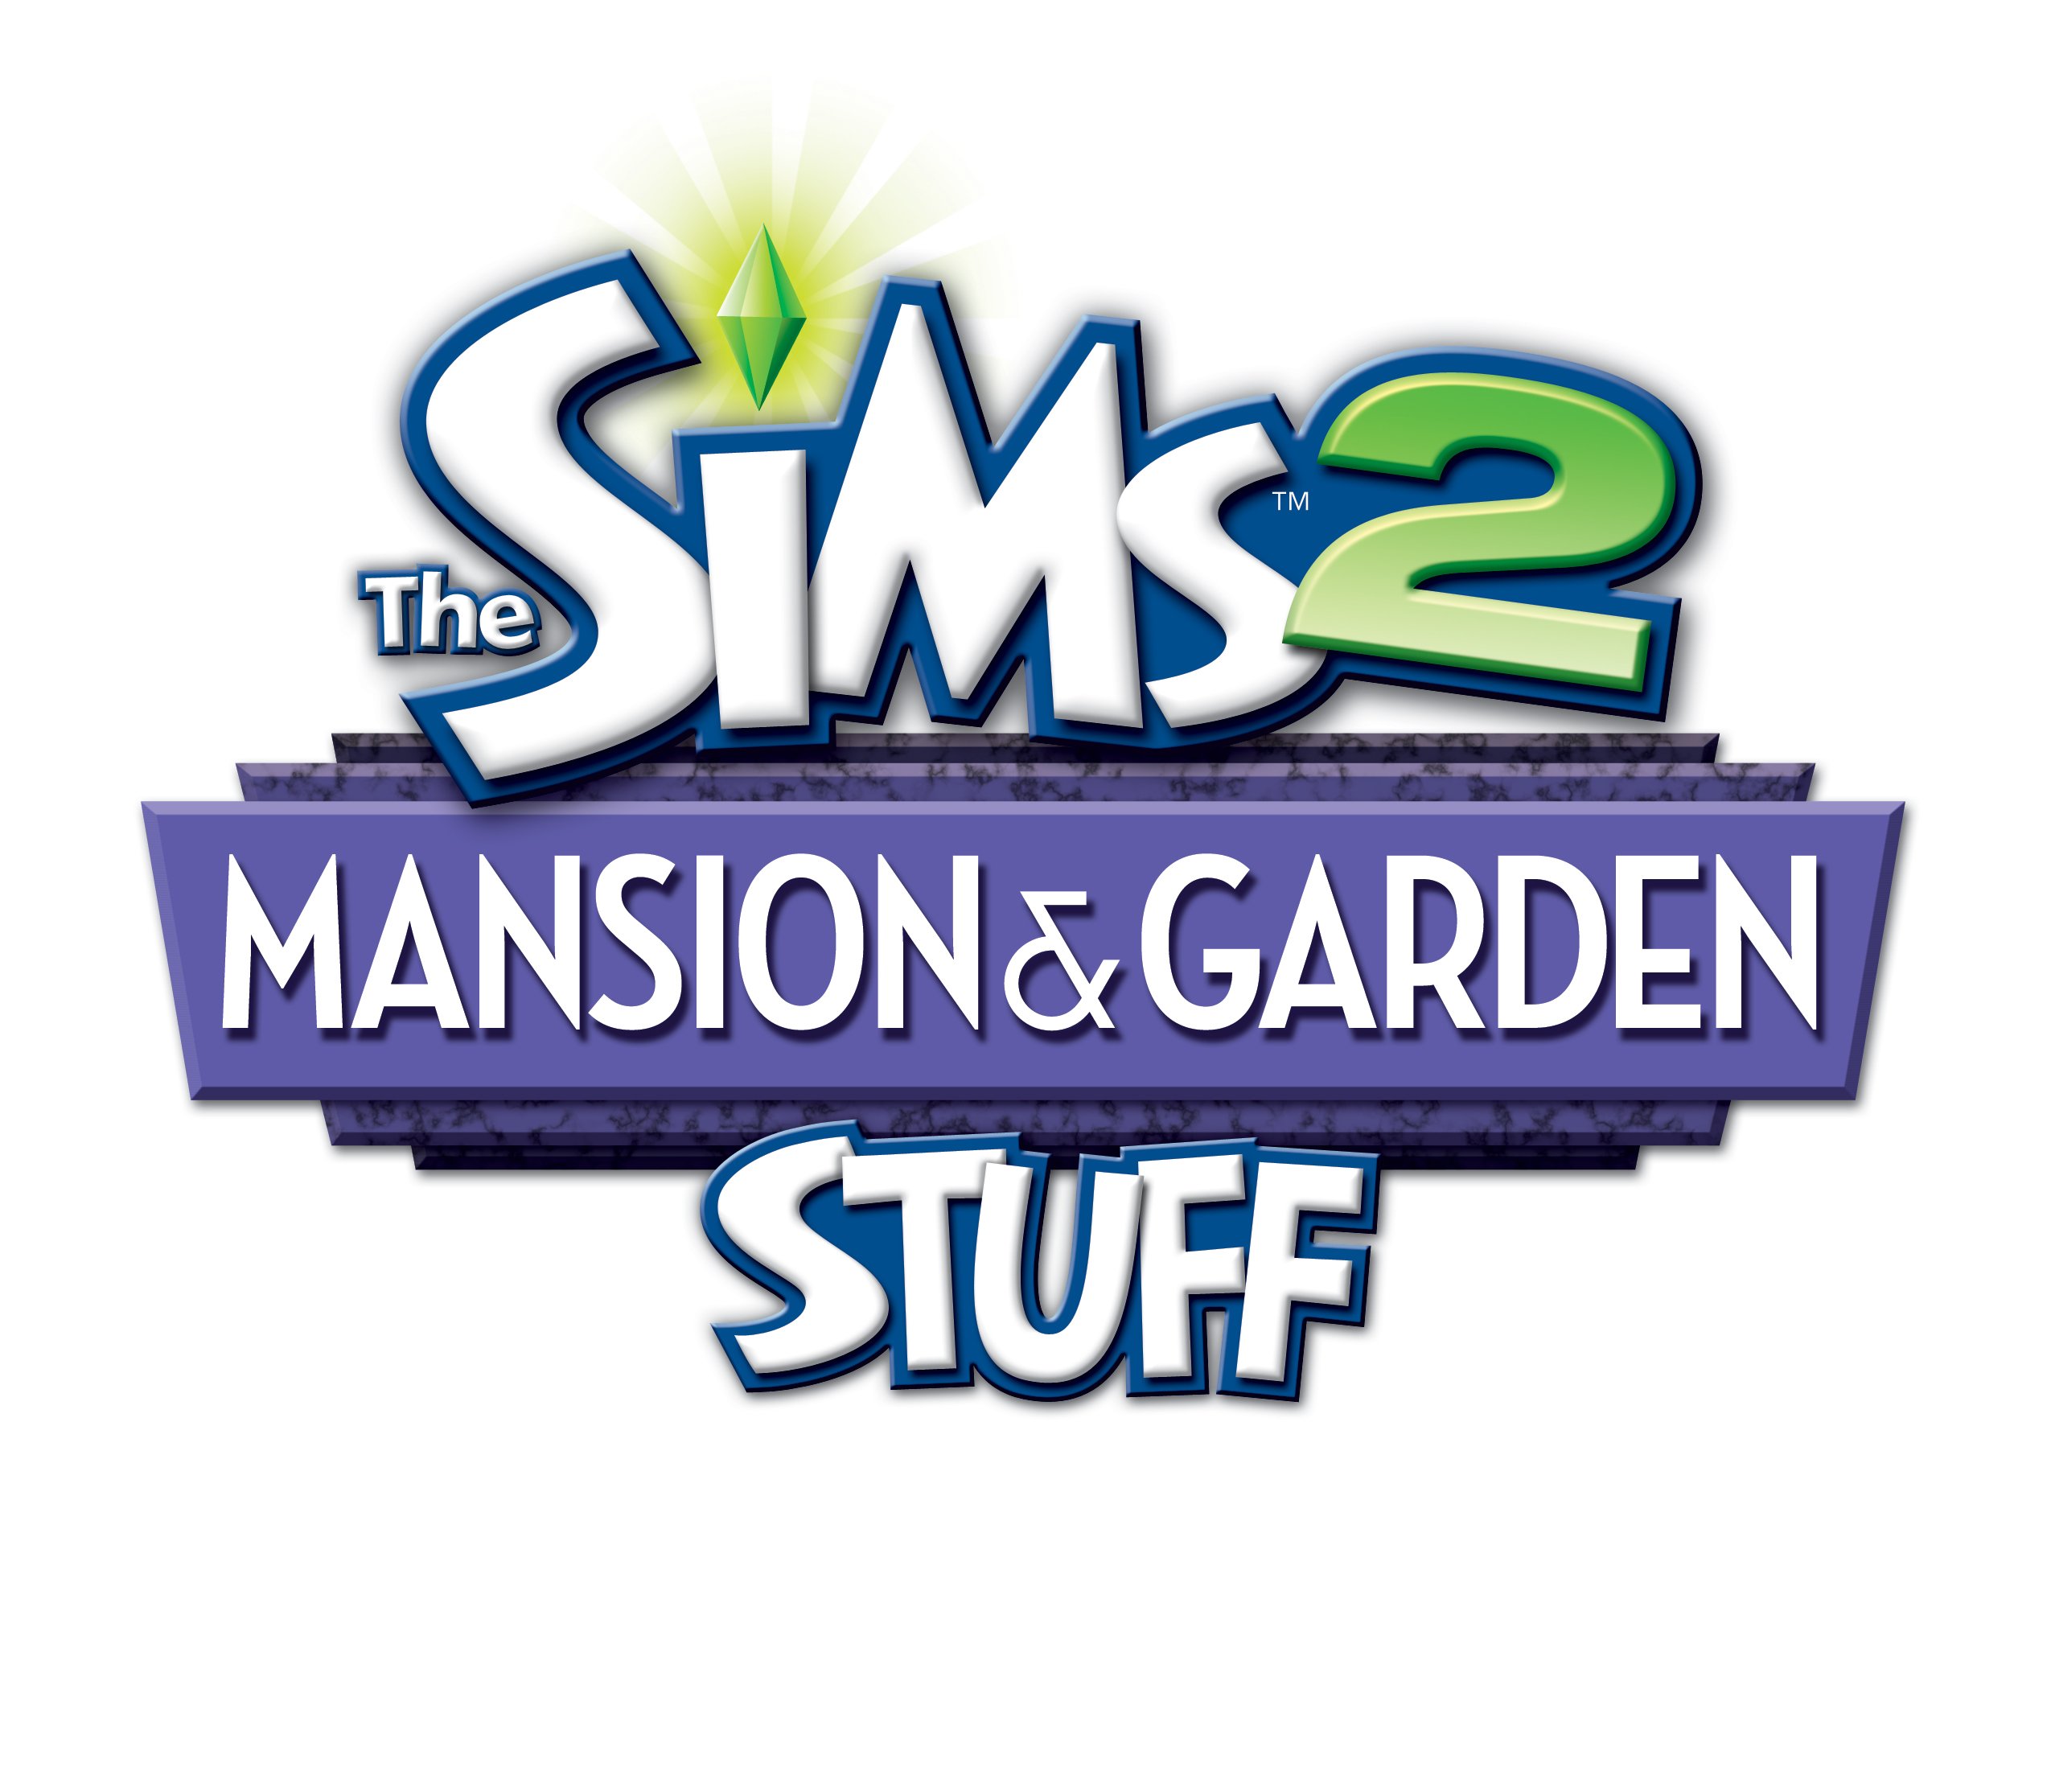 Gartenaccessoires Luxus the Sims 2 Ð¡Ð°Ð´Ñ Ð¸ Ð¾ÑÐ¾Ð±Ð½ÑÐºÐ¸ 9 Ð¹ ÐºÐ°ÑÐ°Ð Ð¾Ð³ [ÐÑÑÐ¸Ð²] Prosims